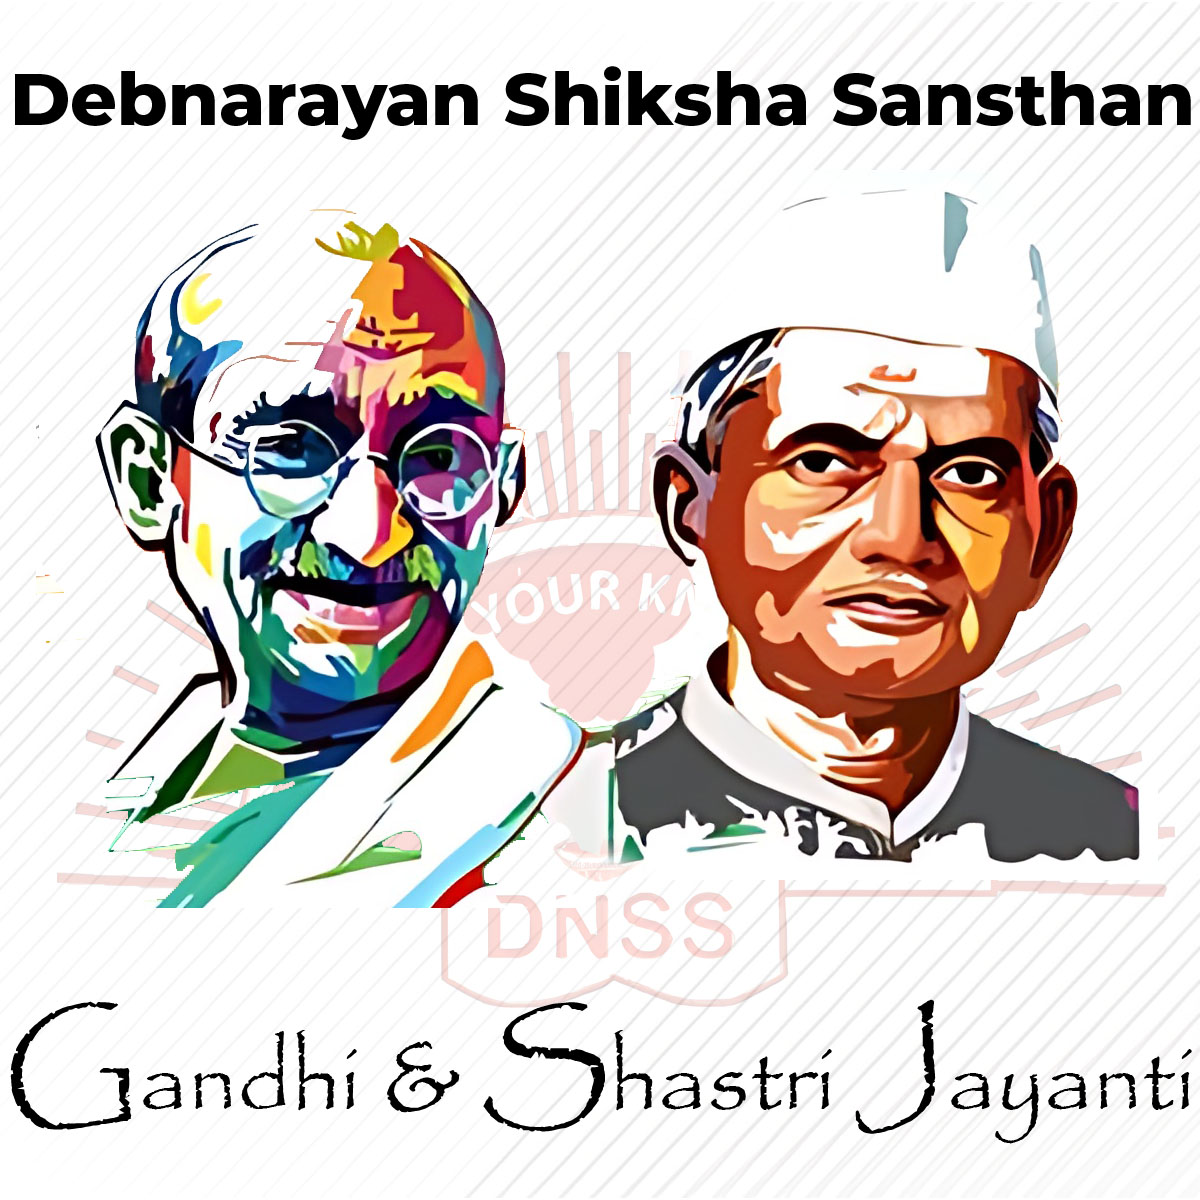 Remembering Visionaries: Tribute to Mahatma Gandhi and Lal Bahadur Shastri Ji.

#SMSVARANASI #gandhiji #Shastriji #LalBahadurShastri #GandhiJayanti #tribute  #LalBahadurShastriJayanti #legends #LegendsLiveOn #commitment  #inspiration #RashtraPita   #varanasi #india #भारत 
#DNSS